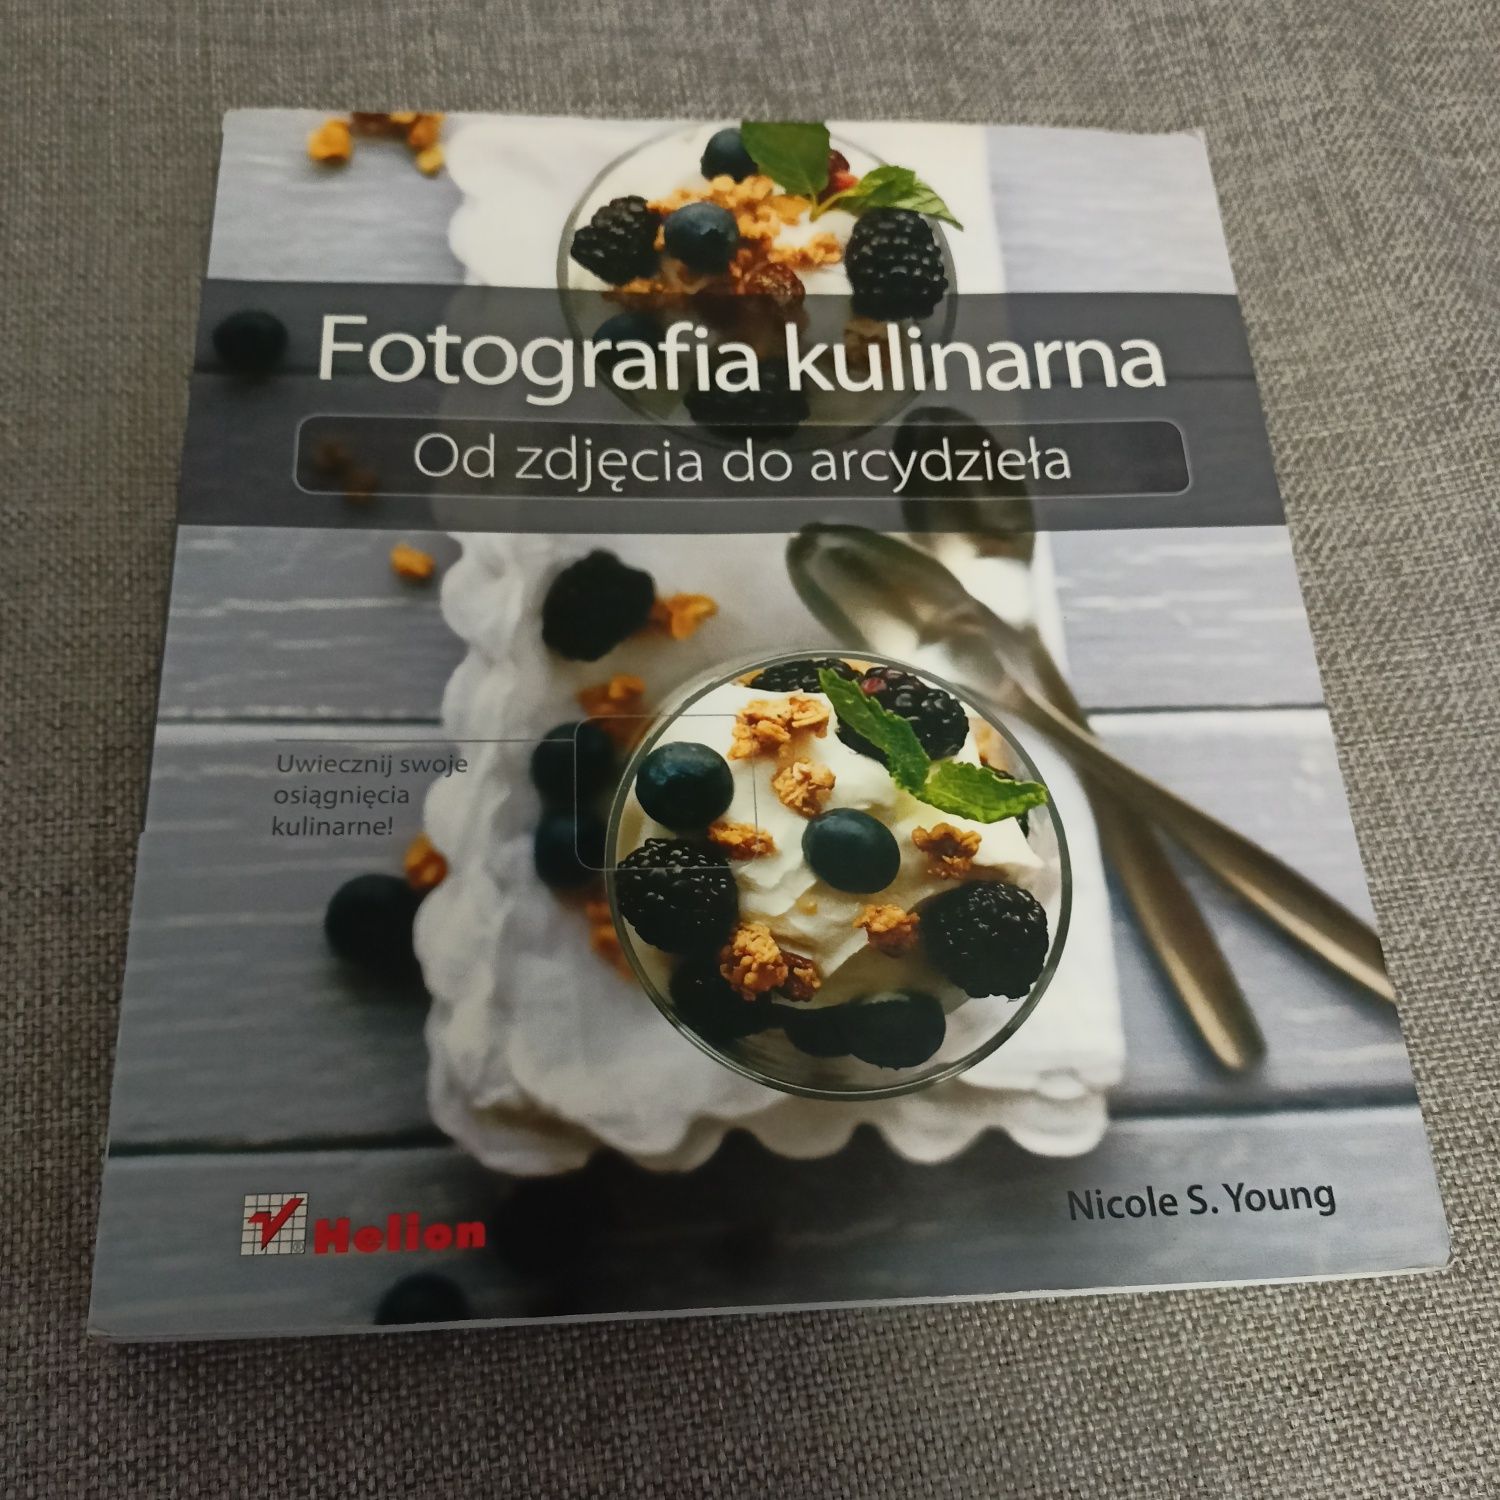 Książka "Fotografia kulinarna"